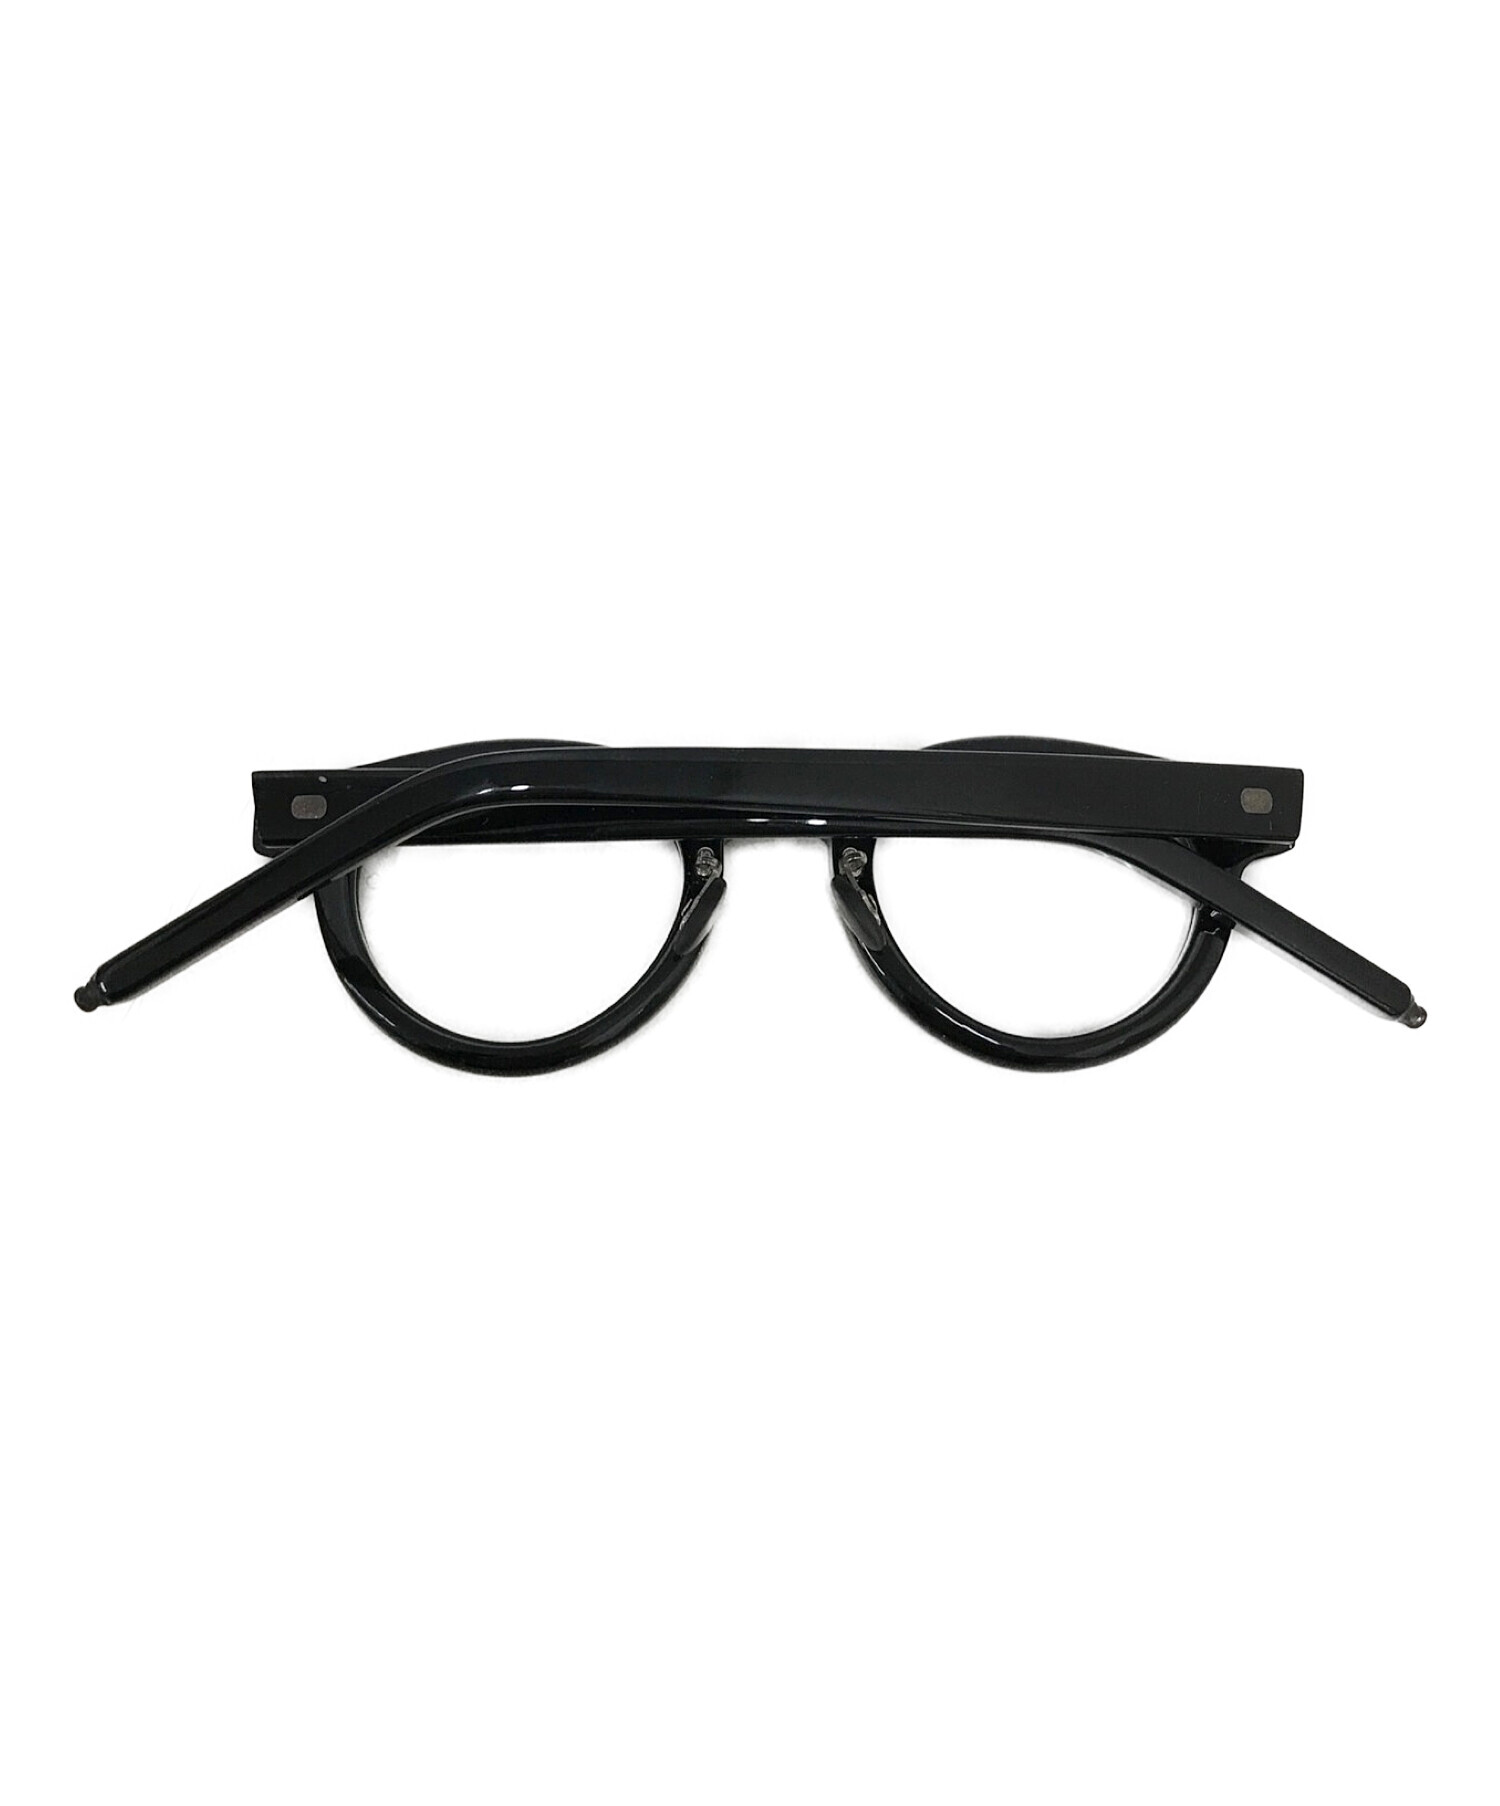 10 EYEVAN (テン アイヴァン) 伊達眼鏡 ブラック サイズ:42□23・147